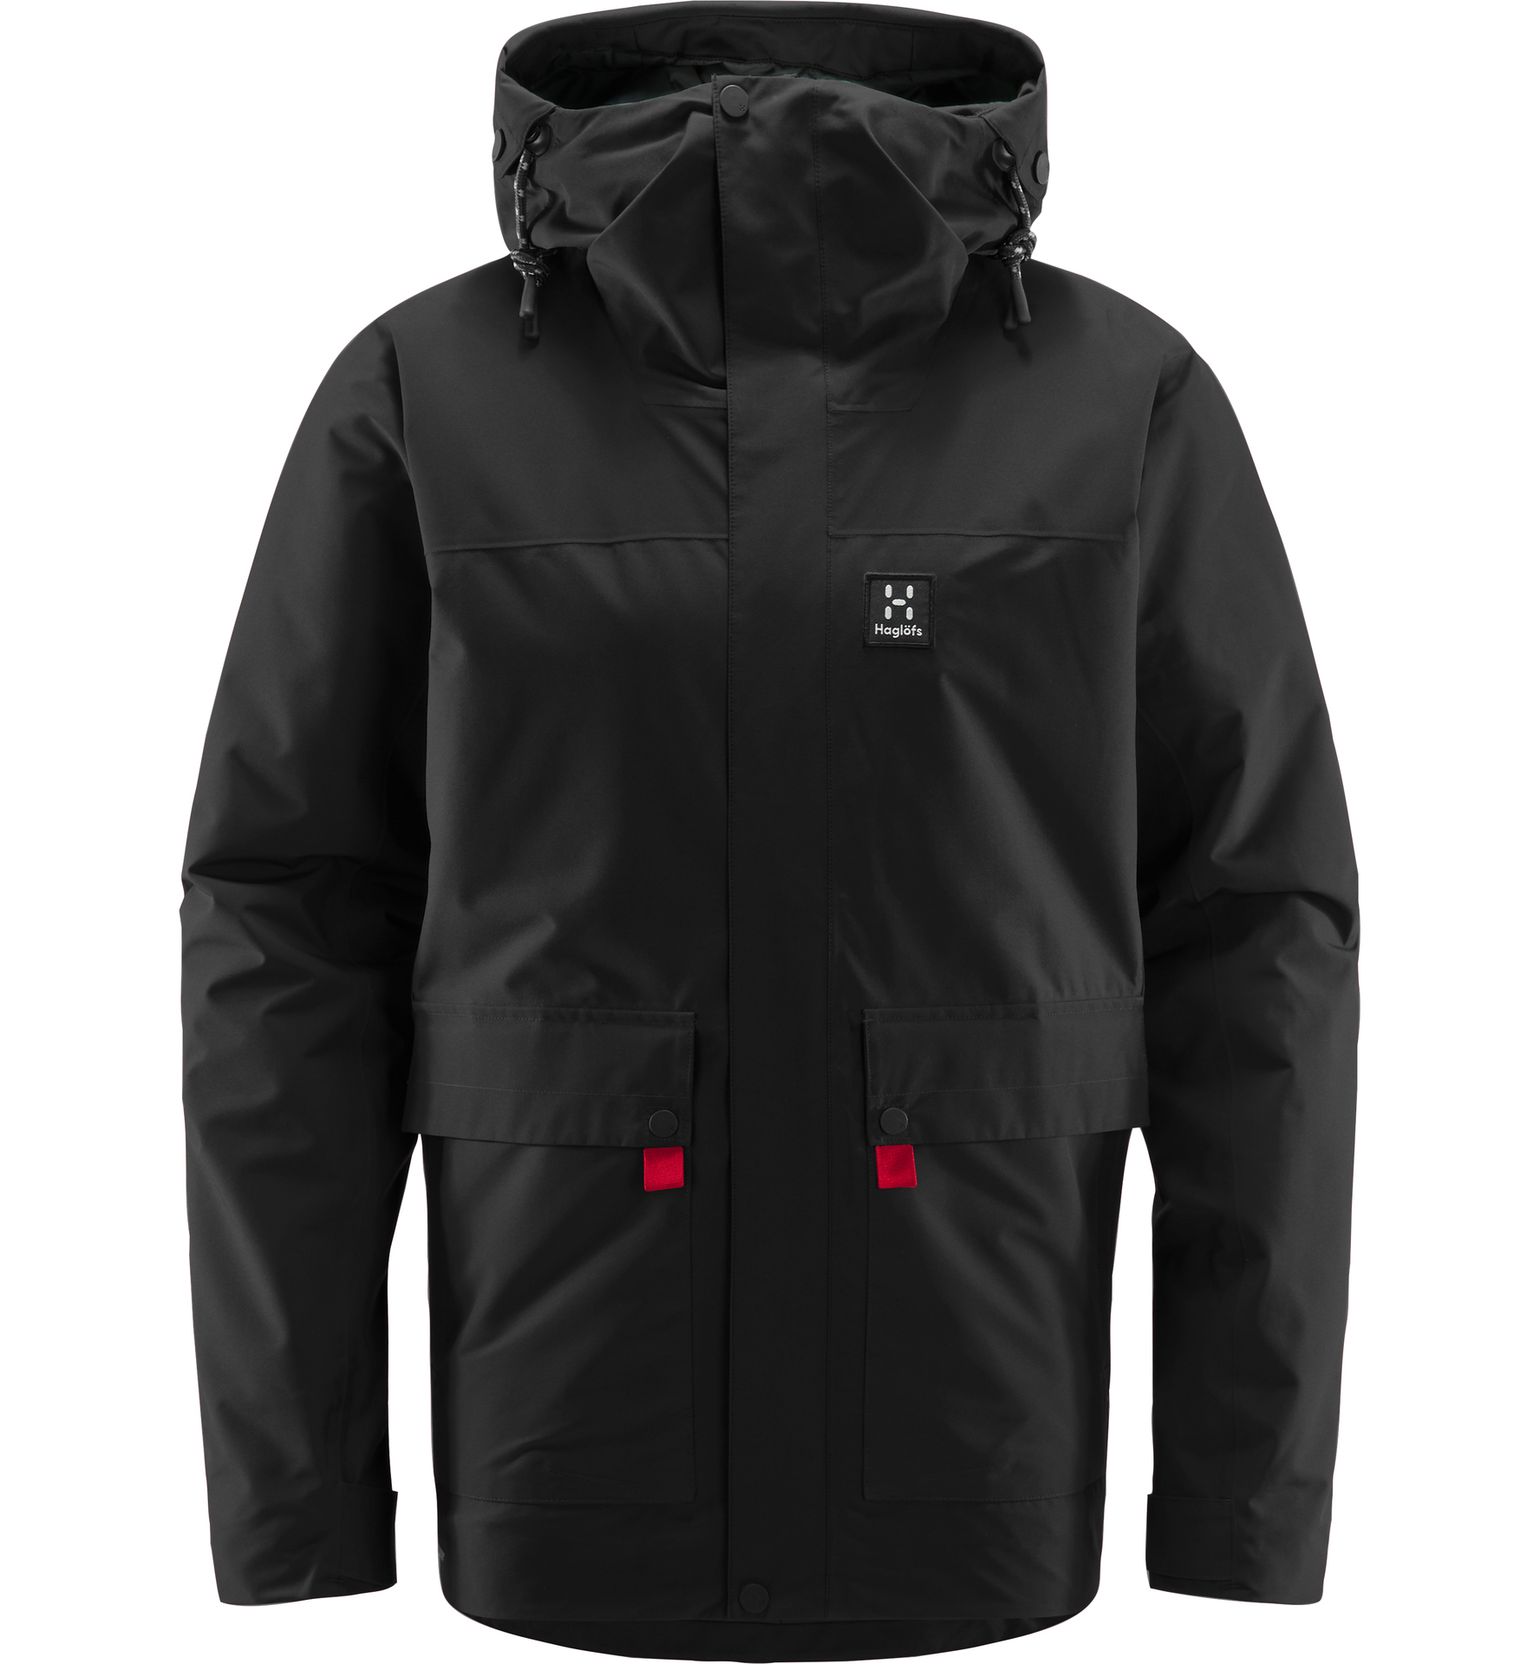 Orsa Jacket Men | True Black | Shell jackets | Lifestyle | Lifestyle |  Windproof jackets | Windbreaker jackets | Jackets | Activities | Raincoats  | Waterproof jackets | Activities | Men | Jackets | Haglöfs